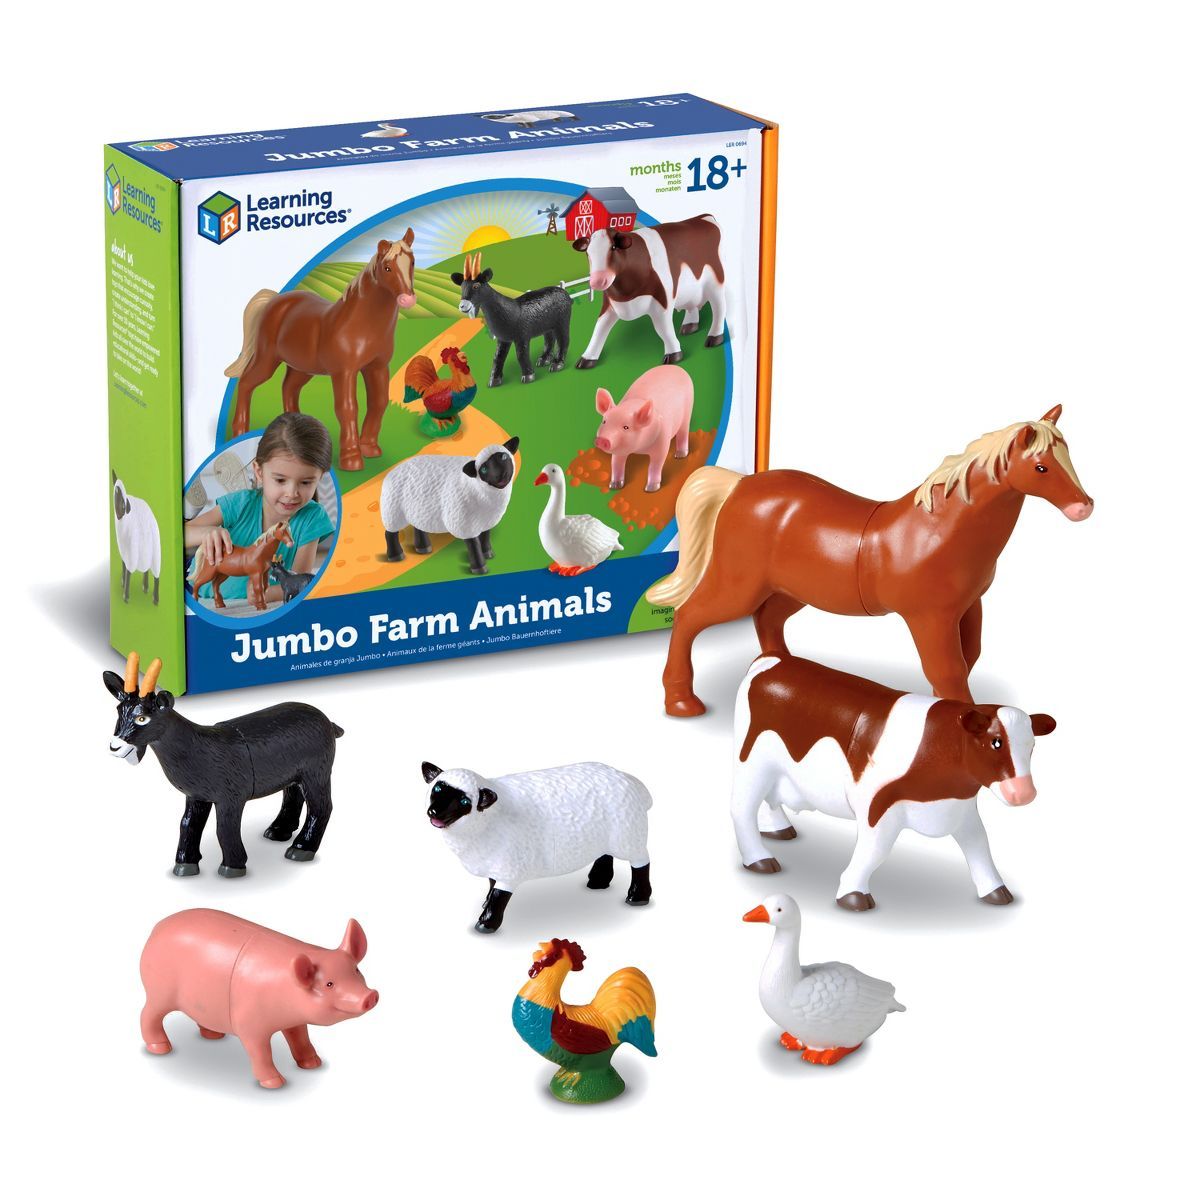 Learning Resources Jumbo Farm Animals | Target